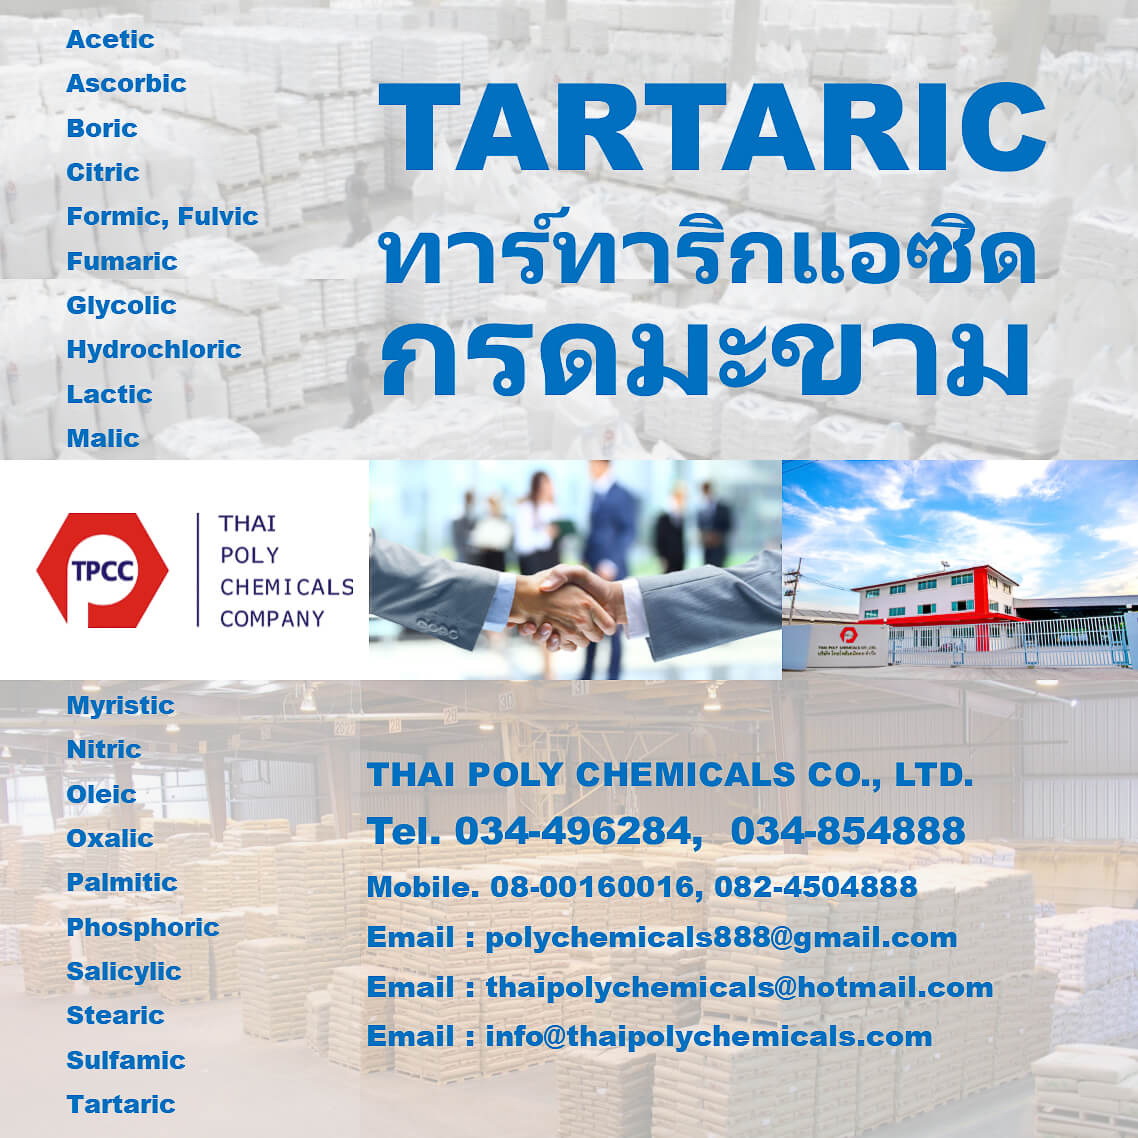 Tartaric acid, ทาร์ทาริกแอซิด, กรดทาร์ทาริก, ทาทาริก, กรดมะขาม, DL-Tartaric รูปที่ 1